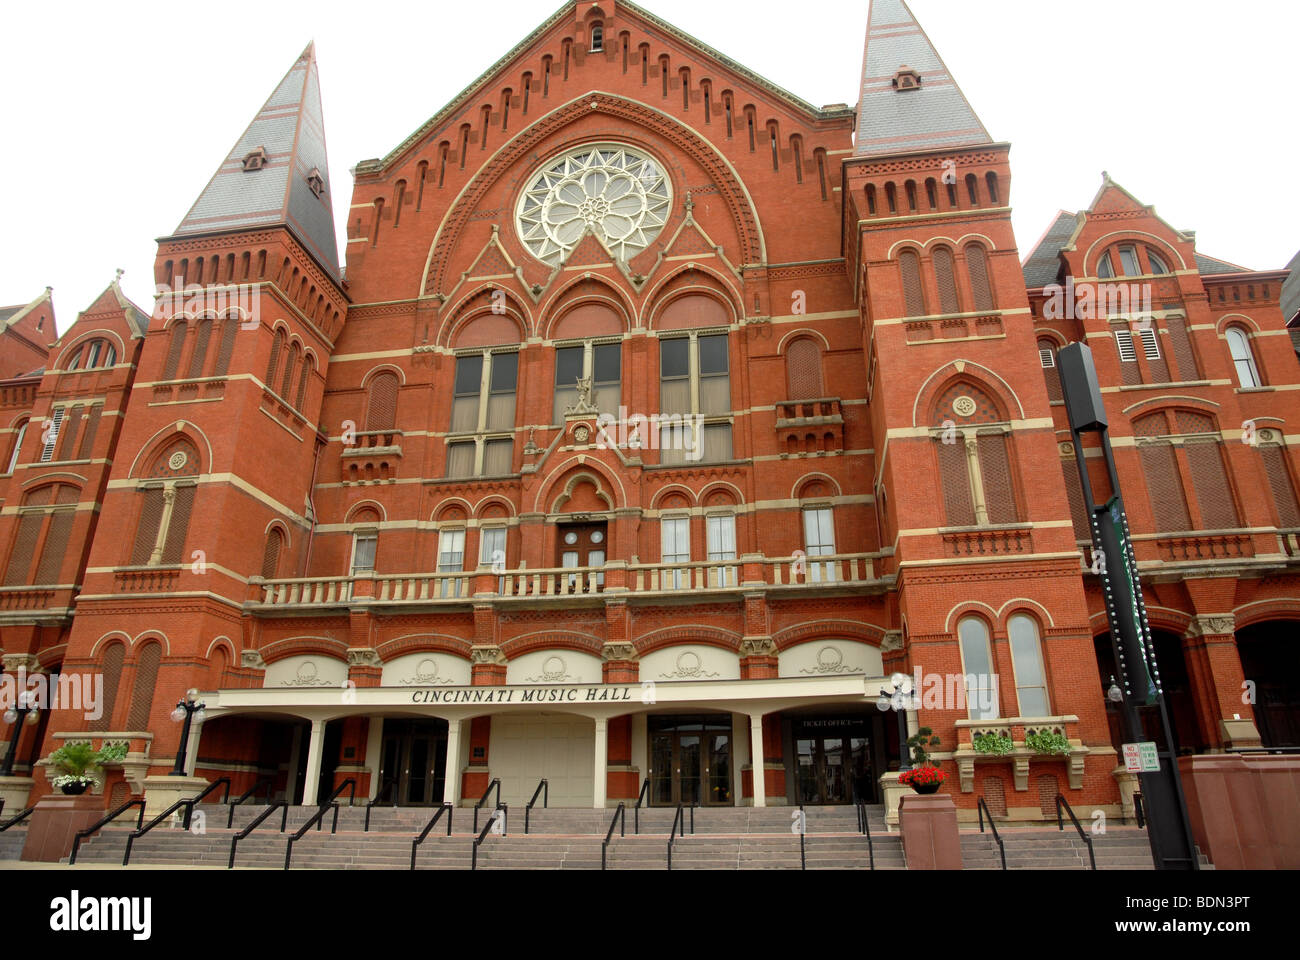 Cincinnati, Ohio Music Hall Stock Photo